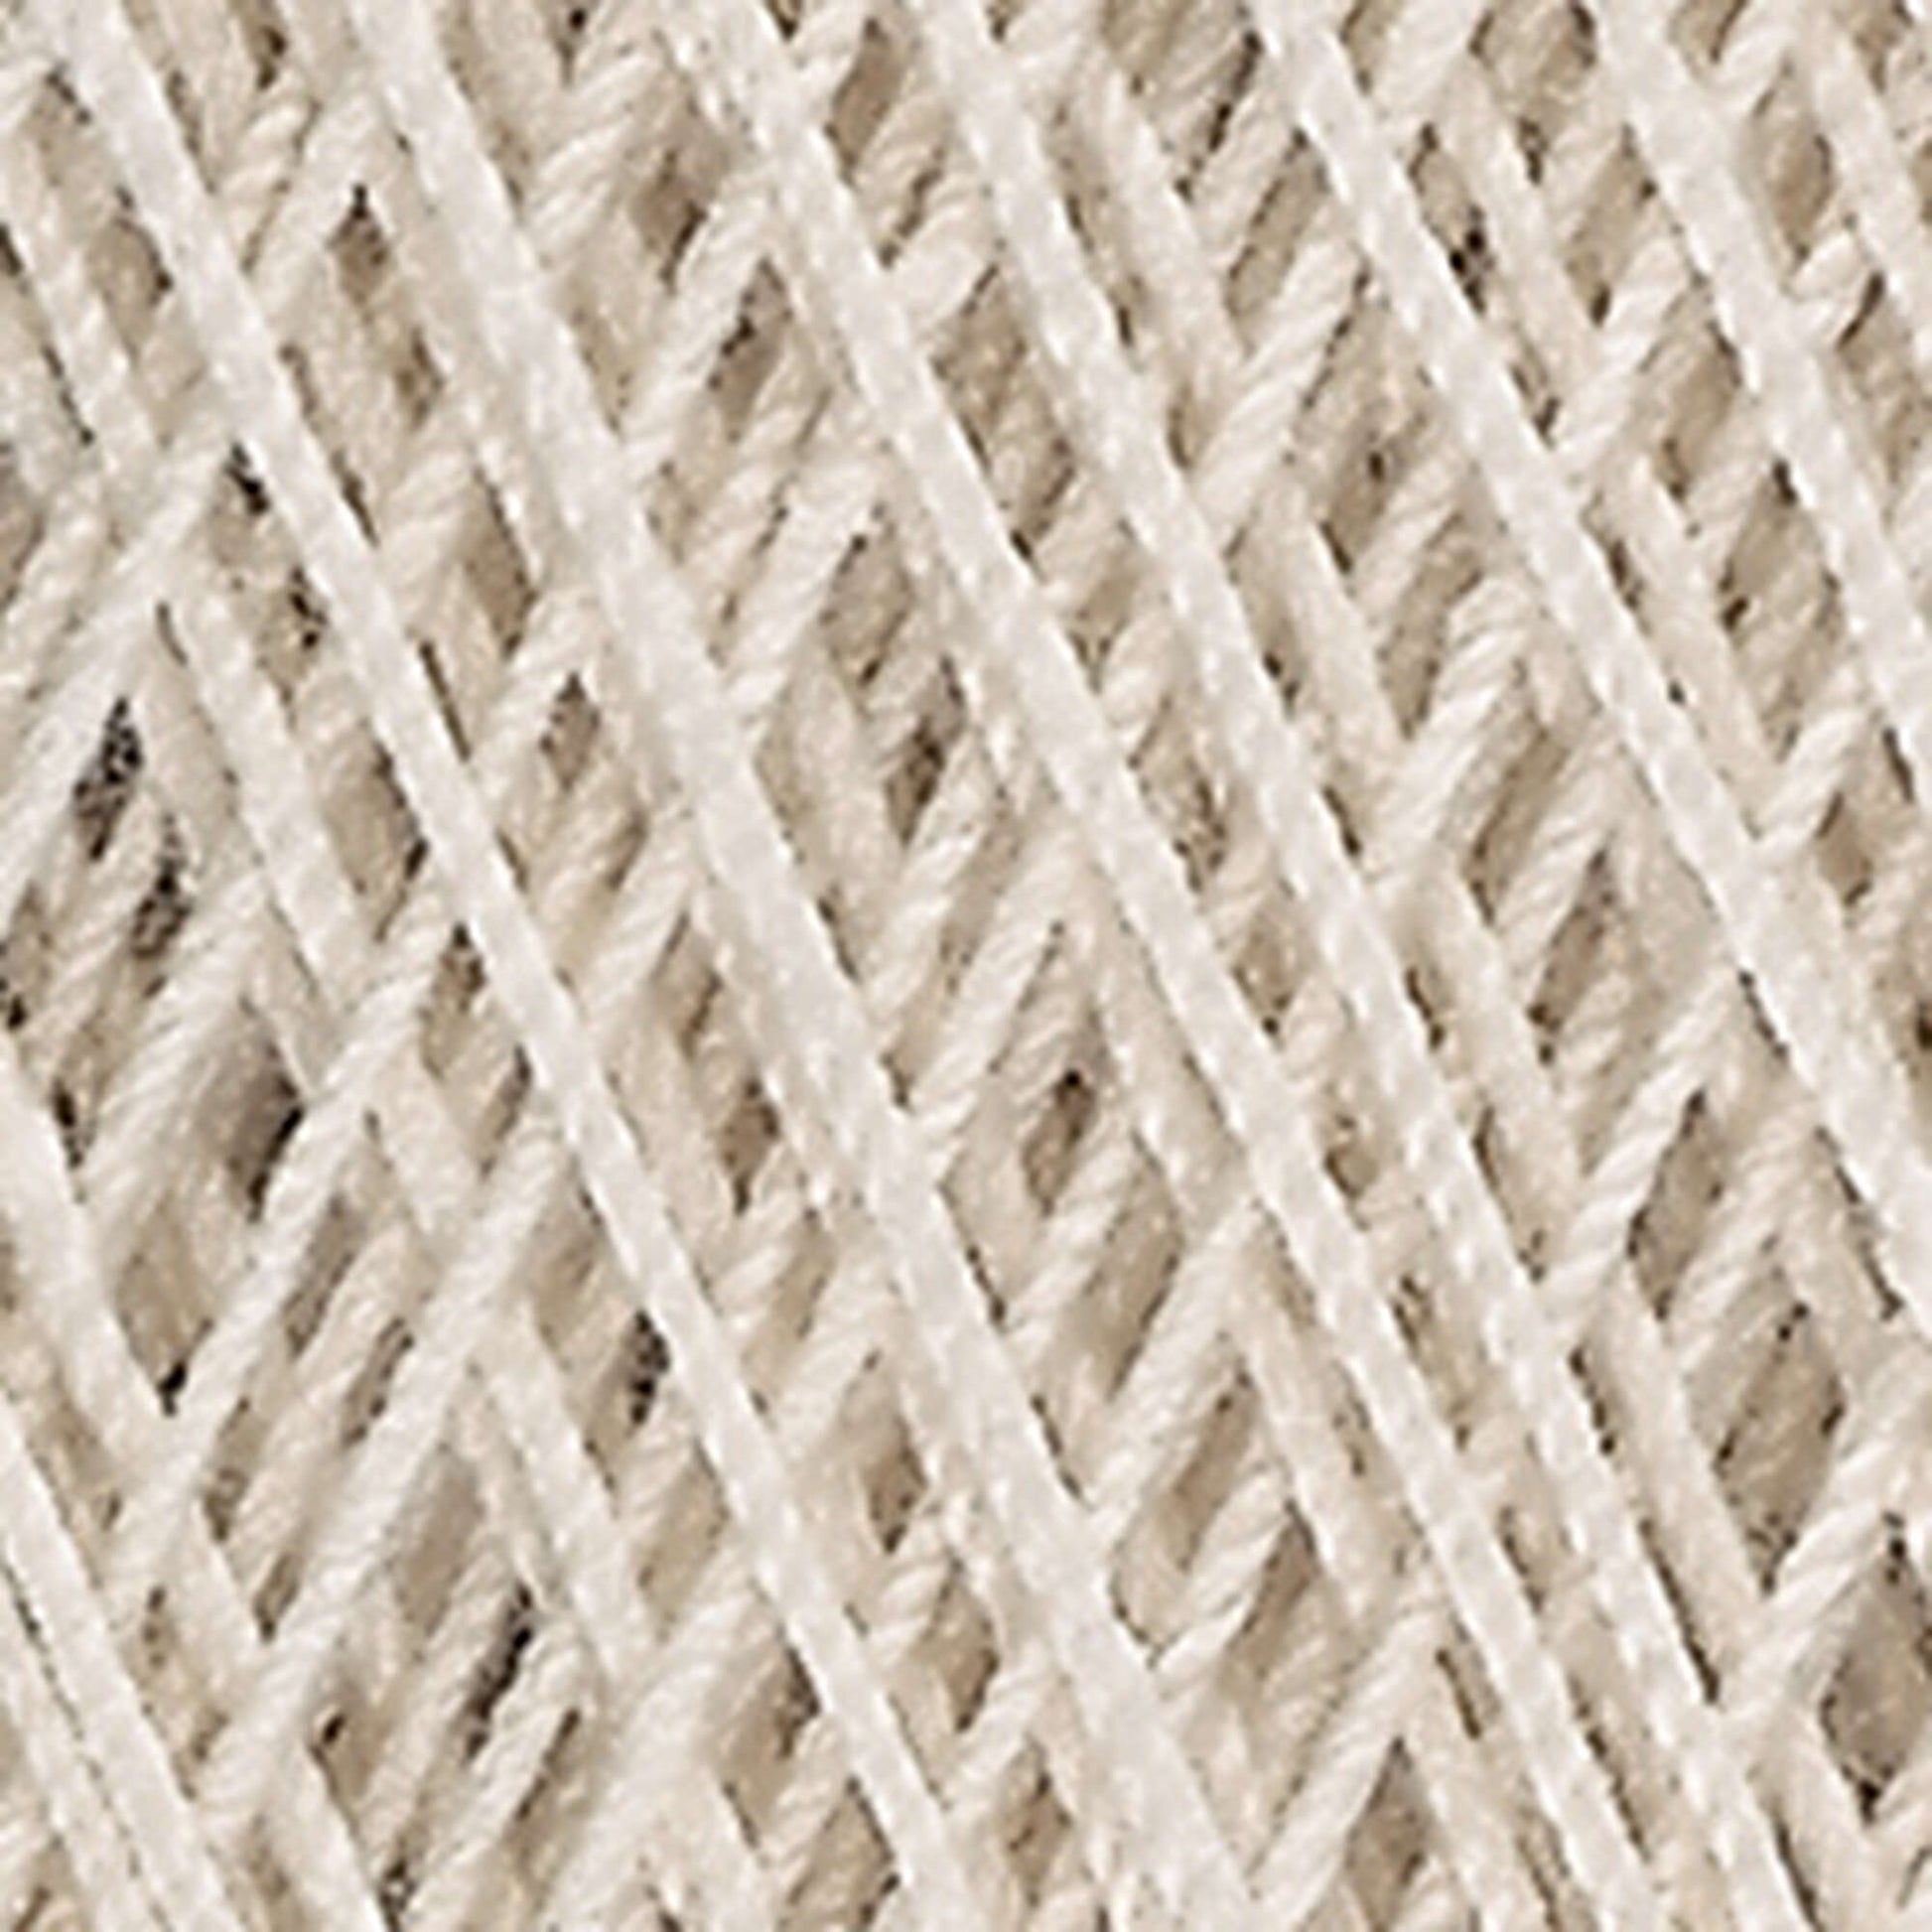 Aunt Lydia's Fine Crochet Thread Size 20